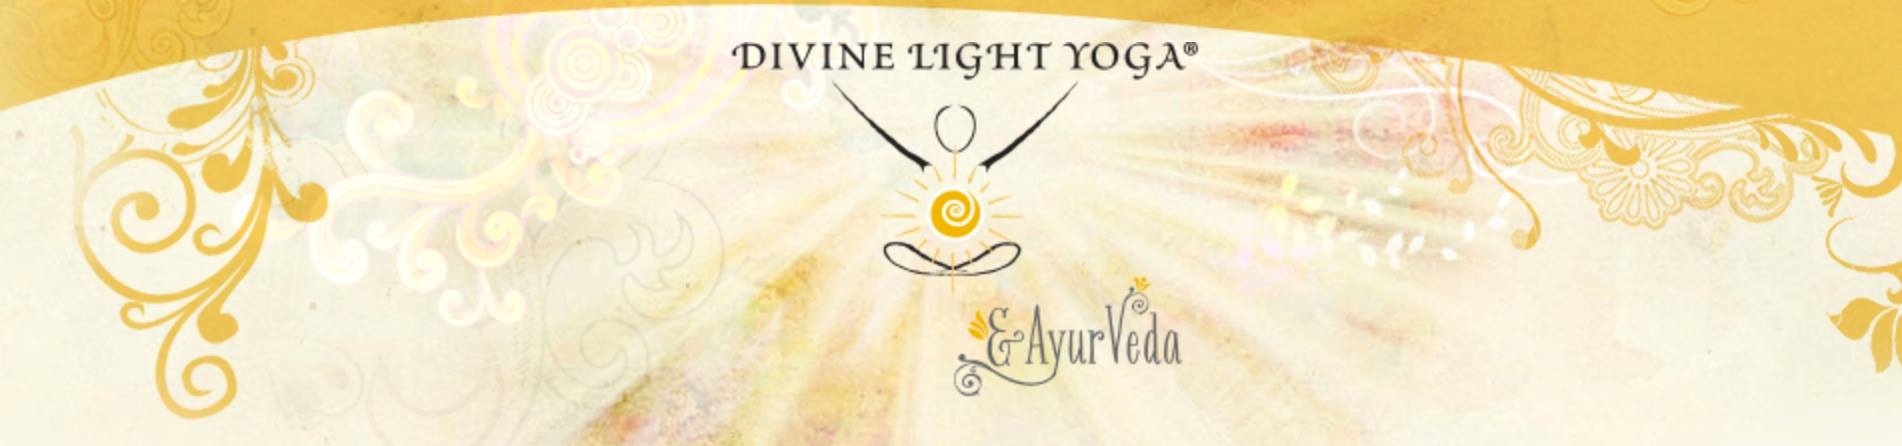 Divine Light Yoga Studio Image